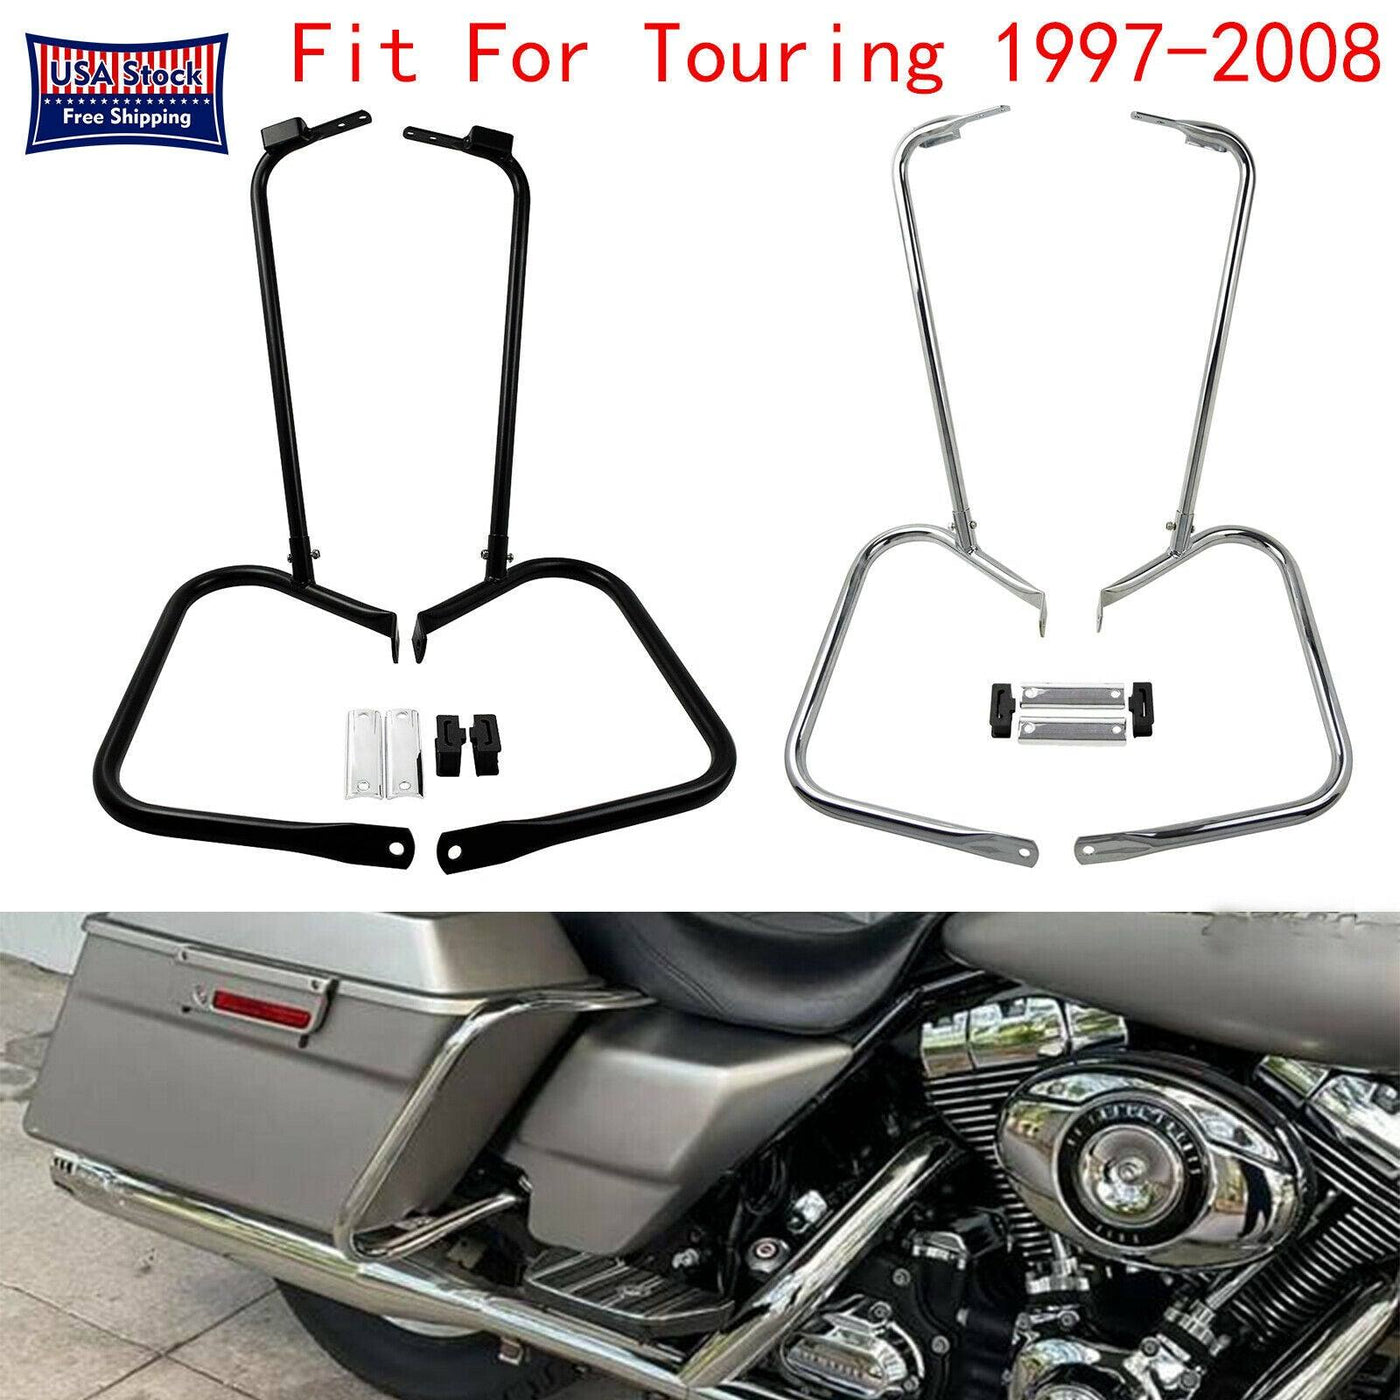 Rear Saddlebag Guards Crash Bar Set Fit For Harley Touring FLHTC FLHR 1997-2008 - Moto Life Products